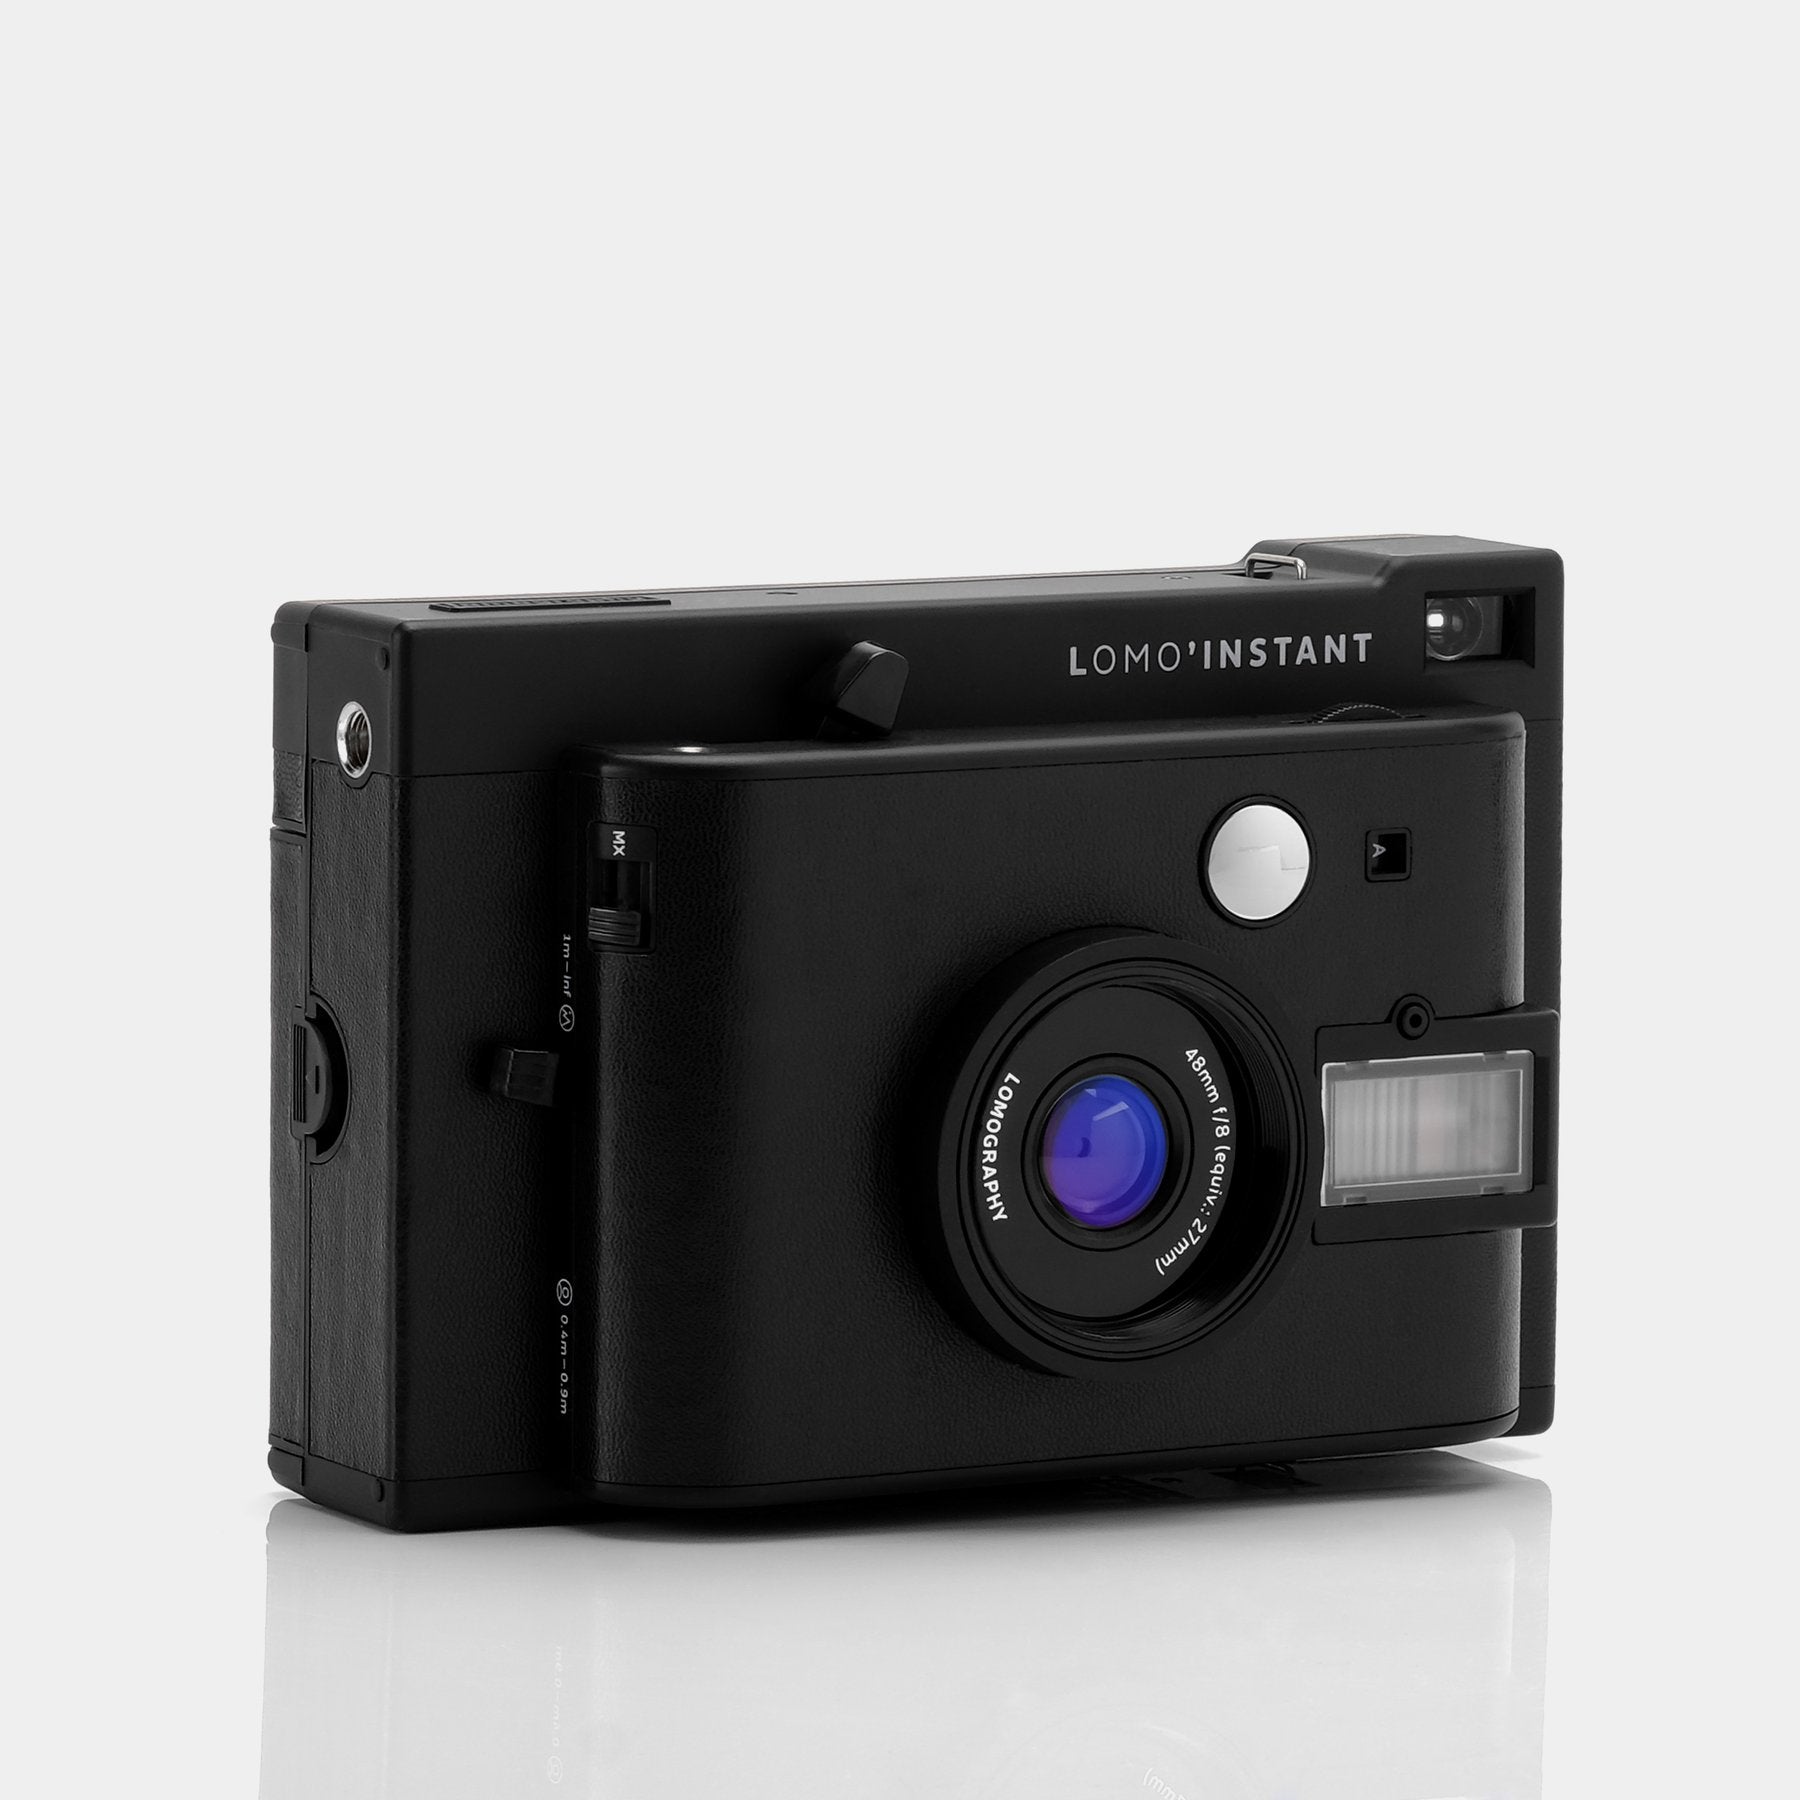 Lomography Lomo'Instant Instax Mini Black Instant Film Camera and Lenses (Damaged Packaging)